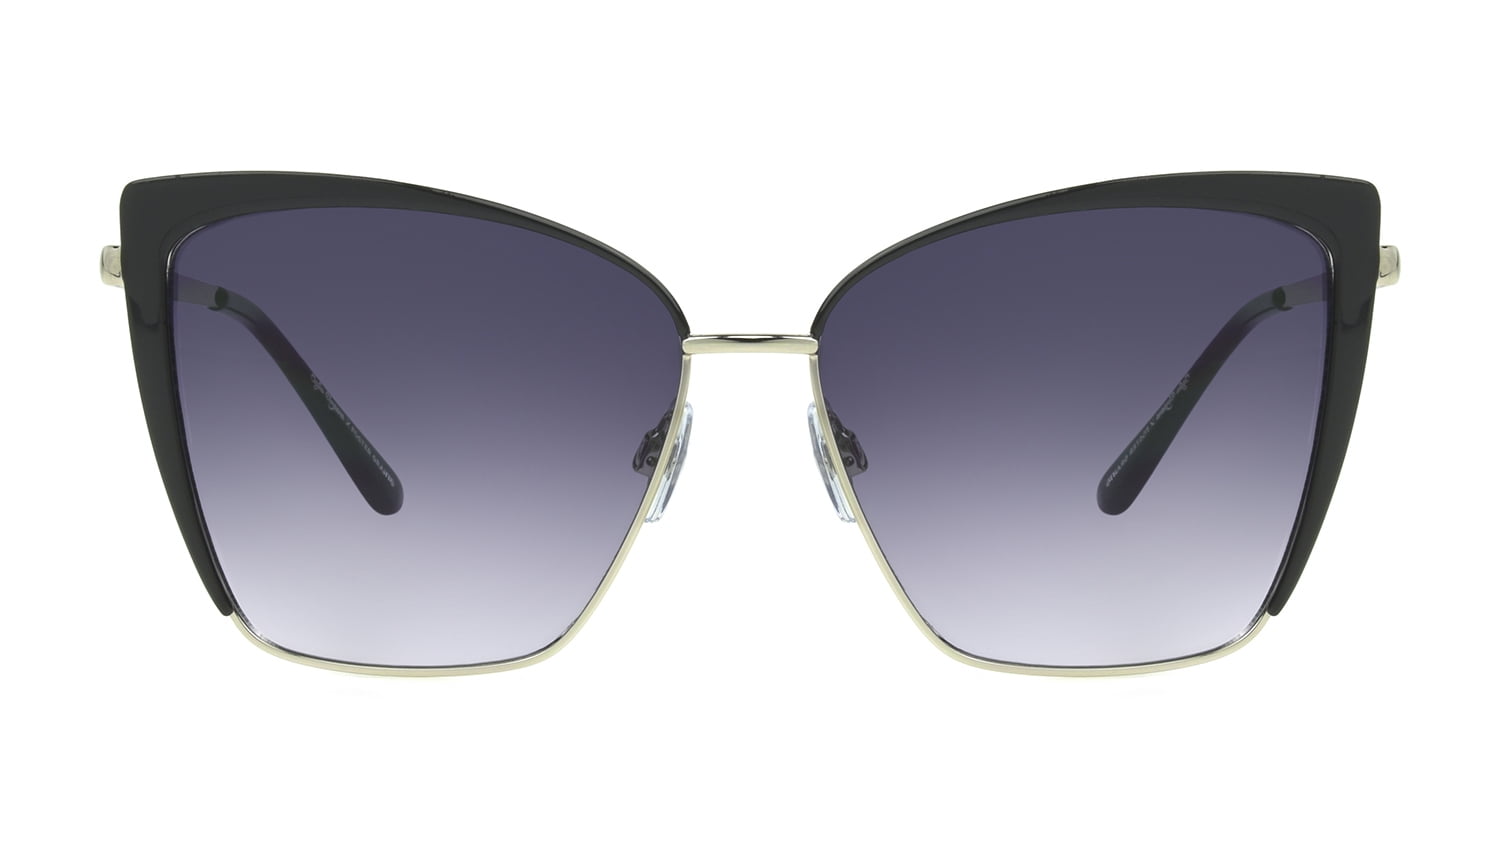 Buy ELEGANTE Men's Square Sunglasses Gold, Black Frame Black Lens,  Polarization ( Medium ) - Pack Of 1 at Amazon.in